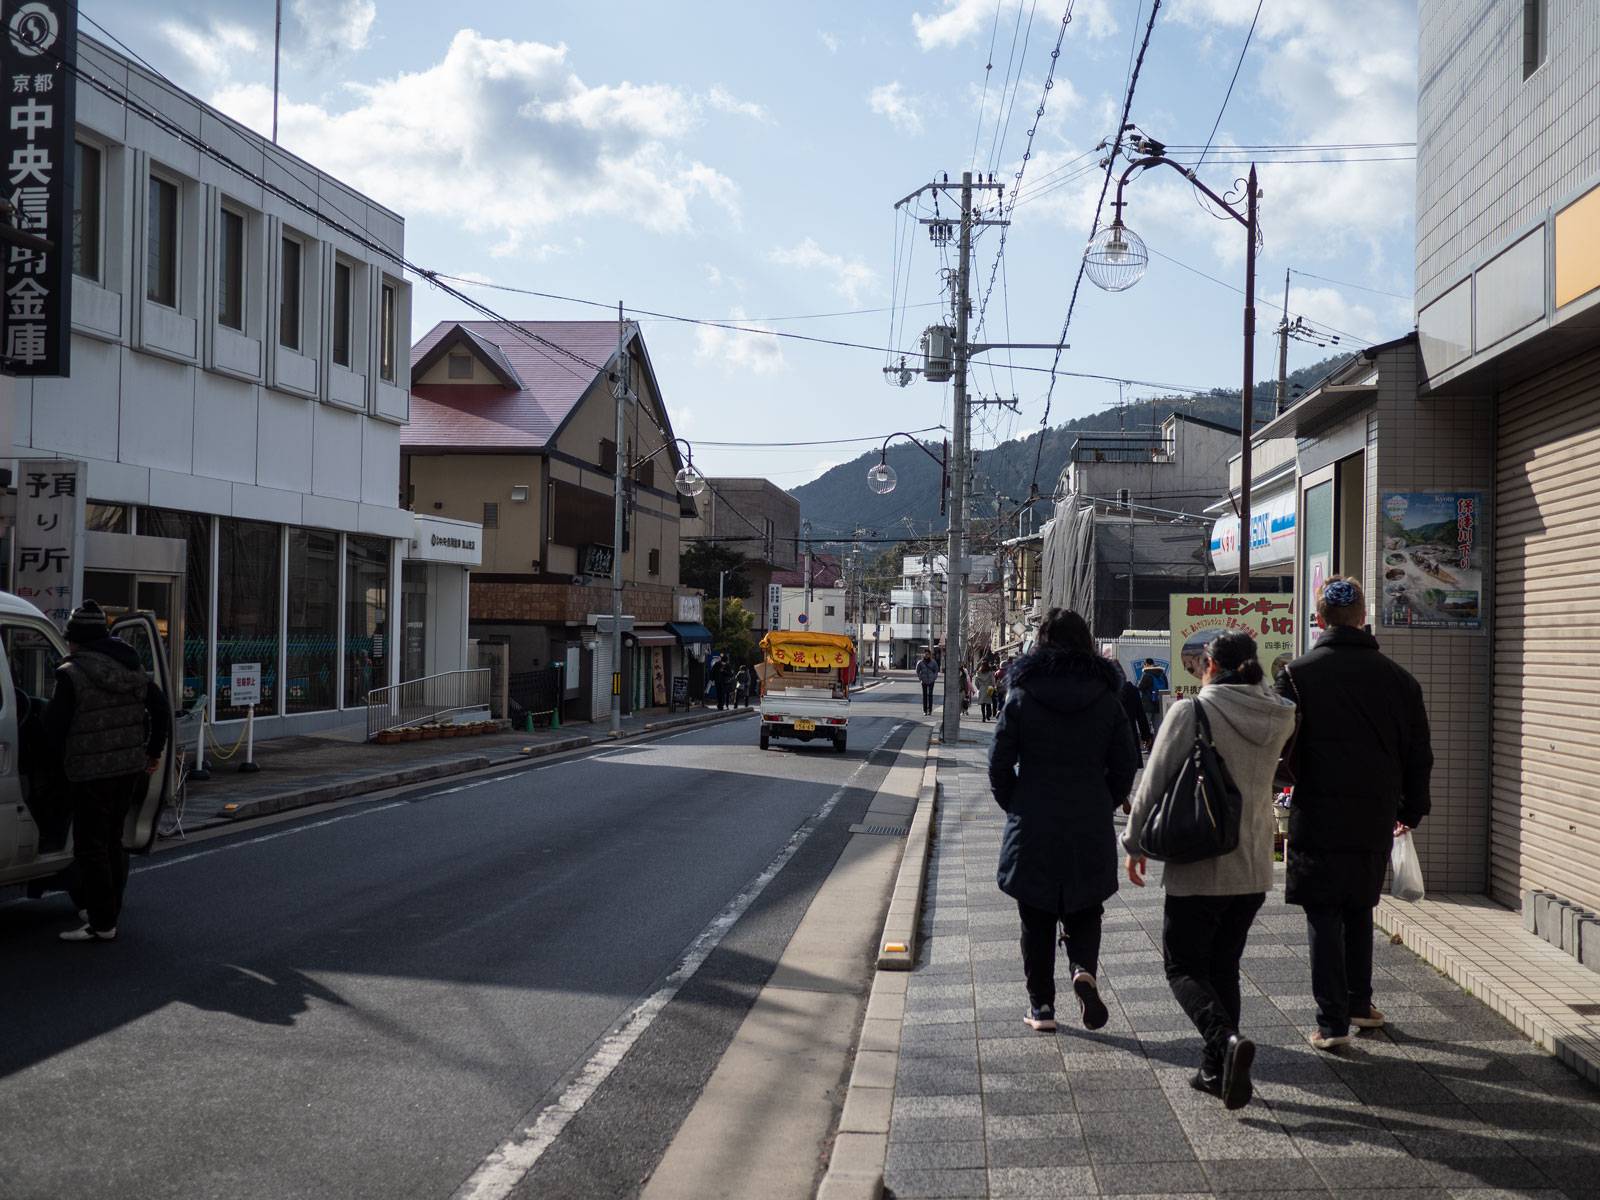 Bright, sunny conditions as we walk towards Arashiyama